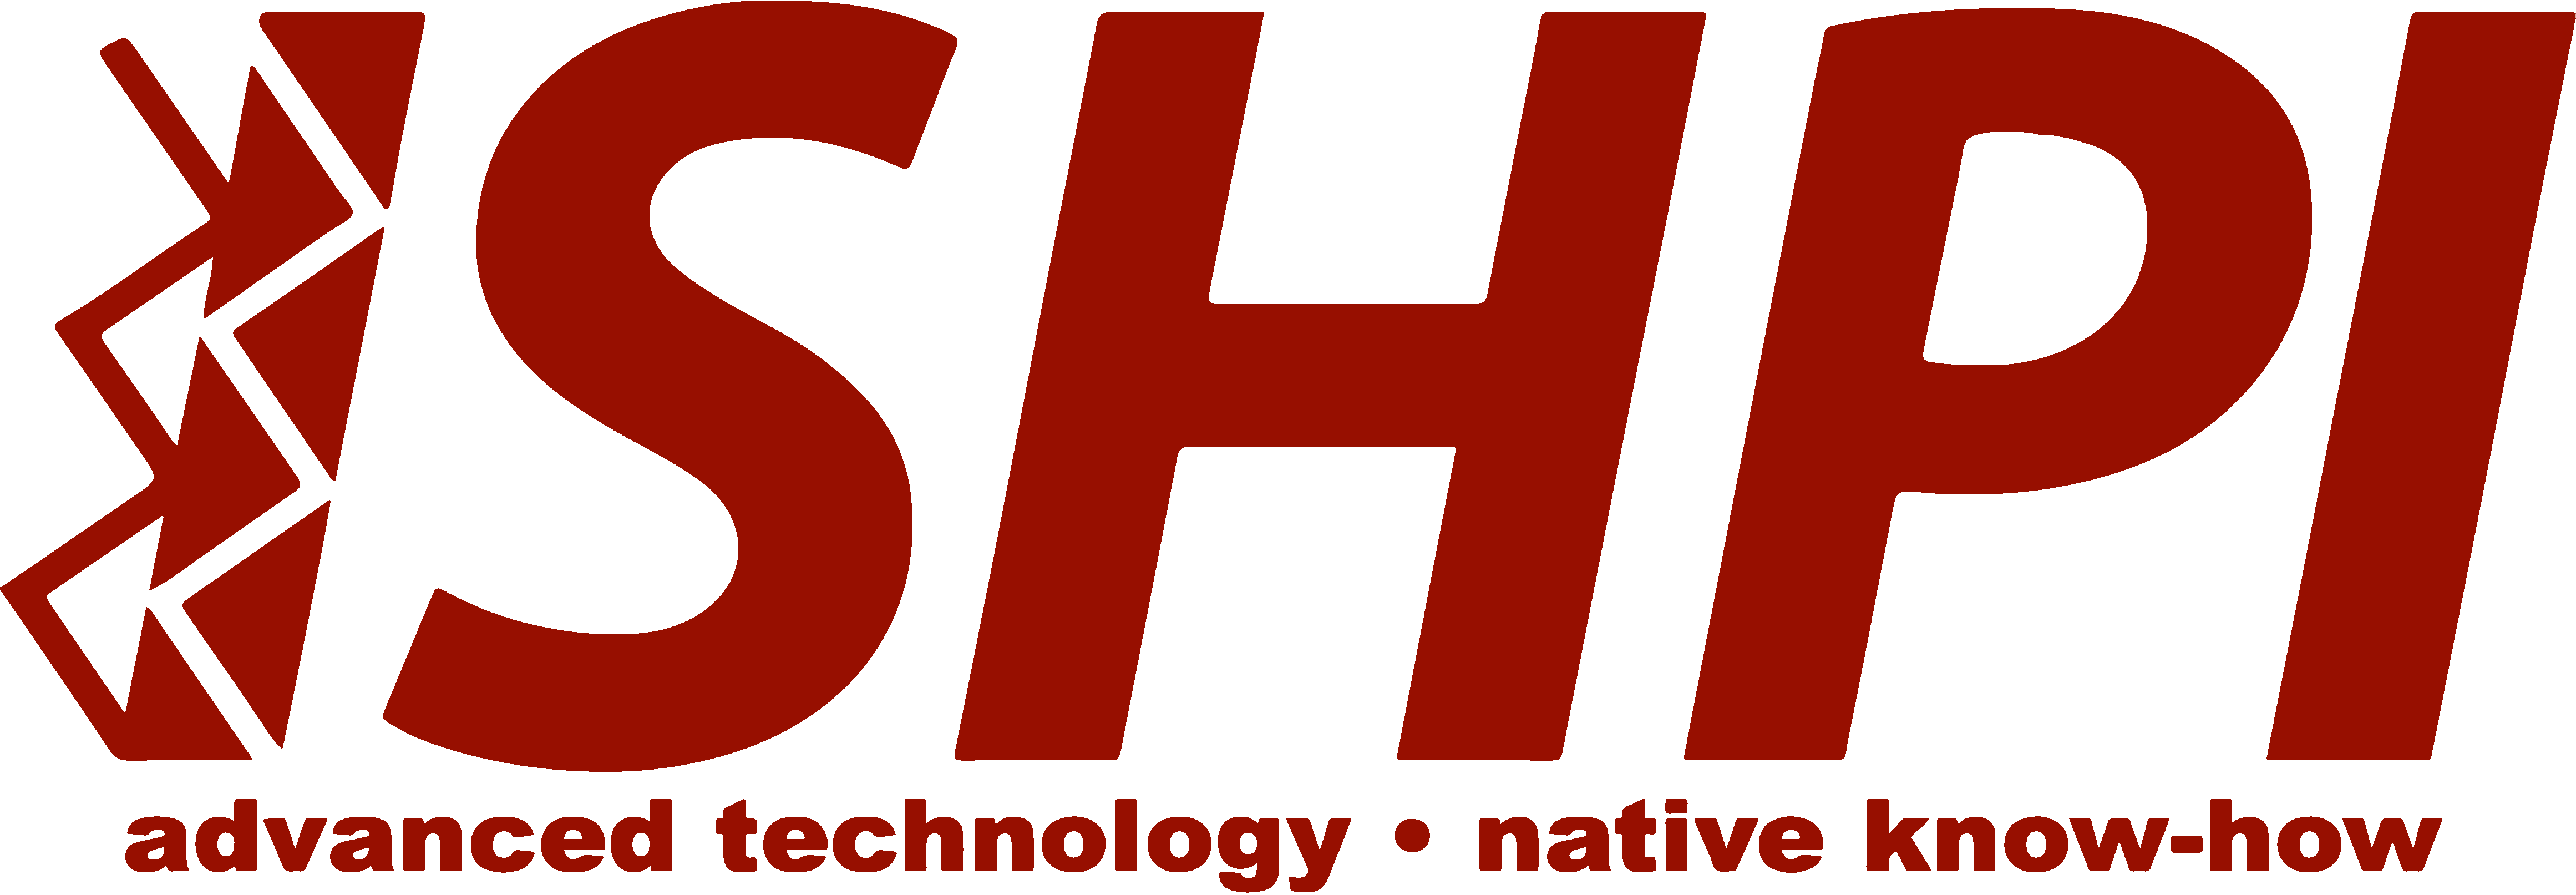 ISHPI advanced technology, native know-how Logo